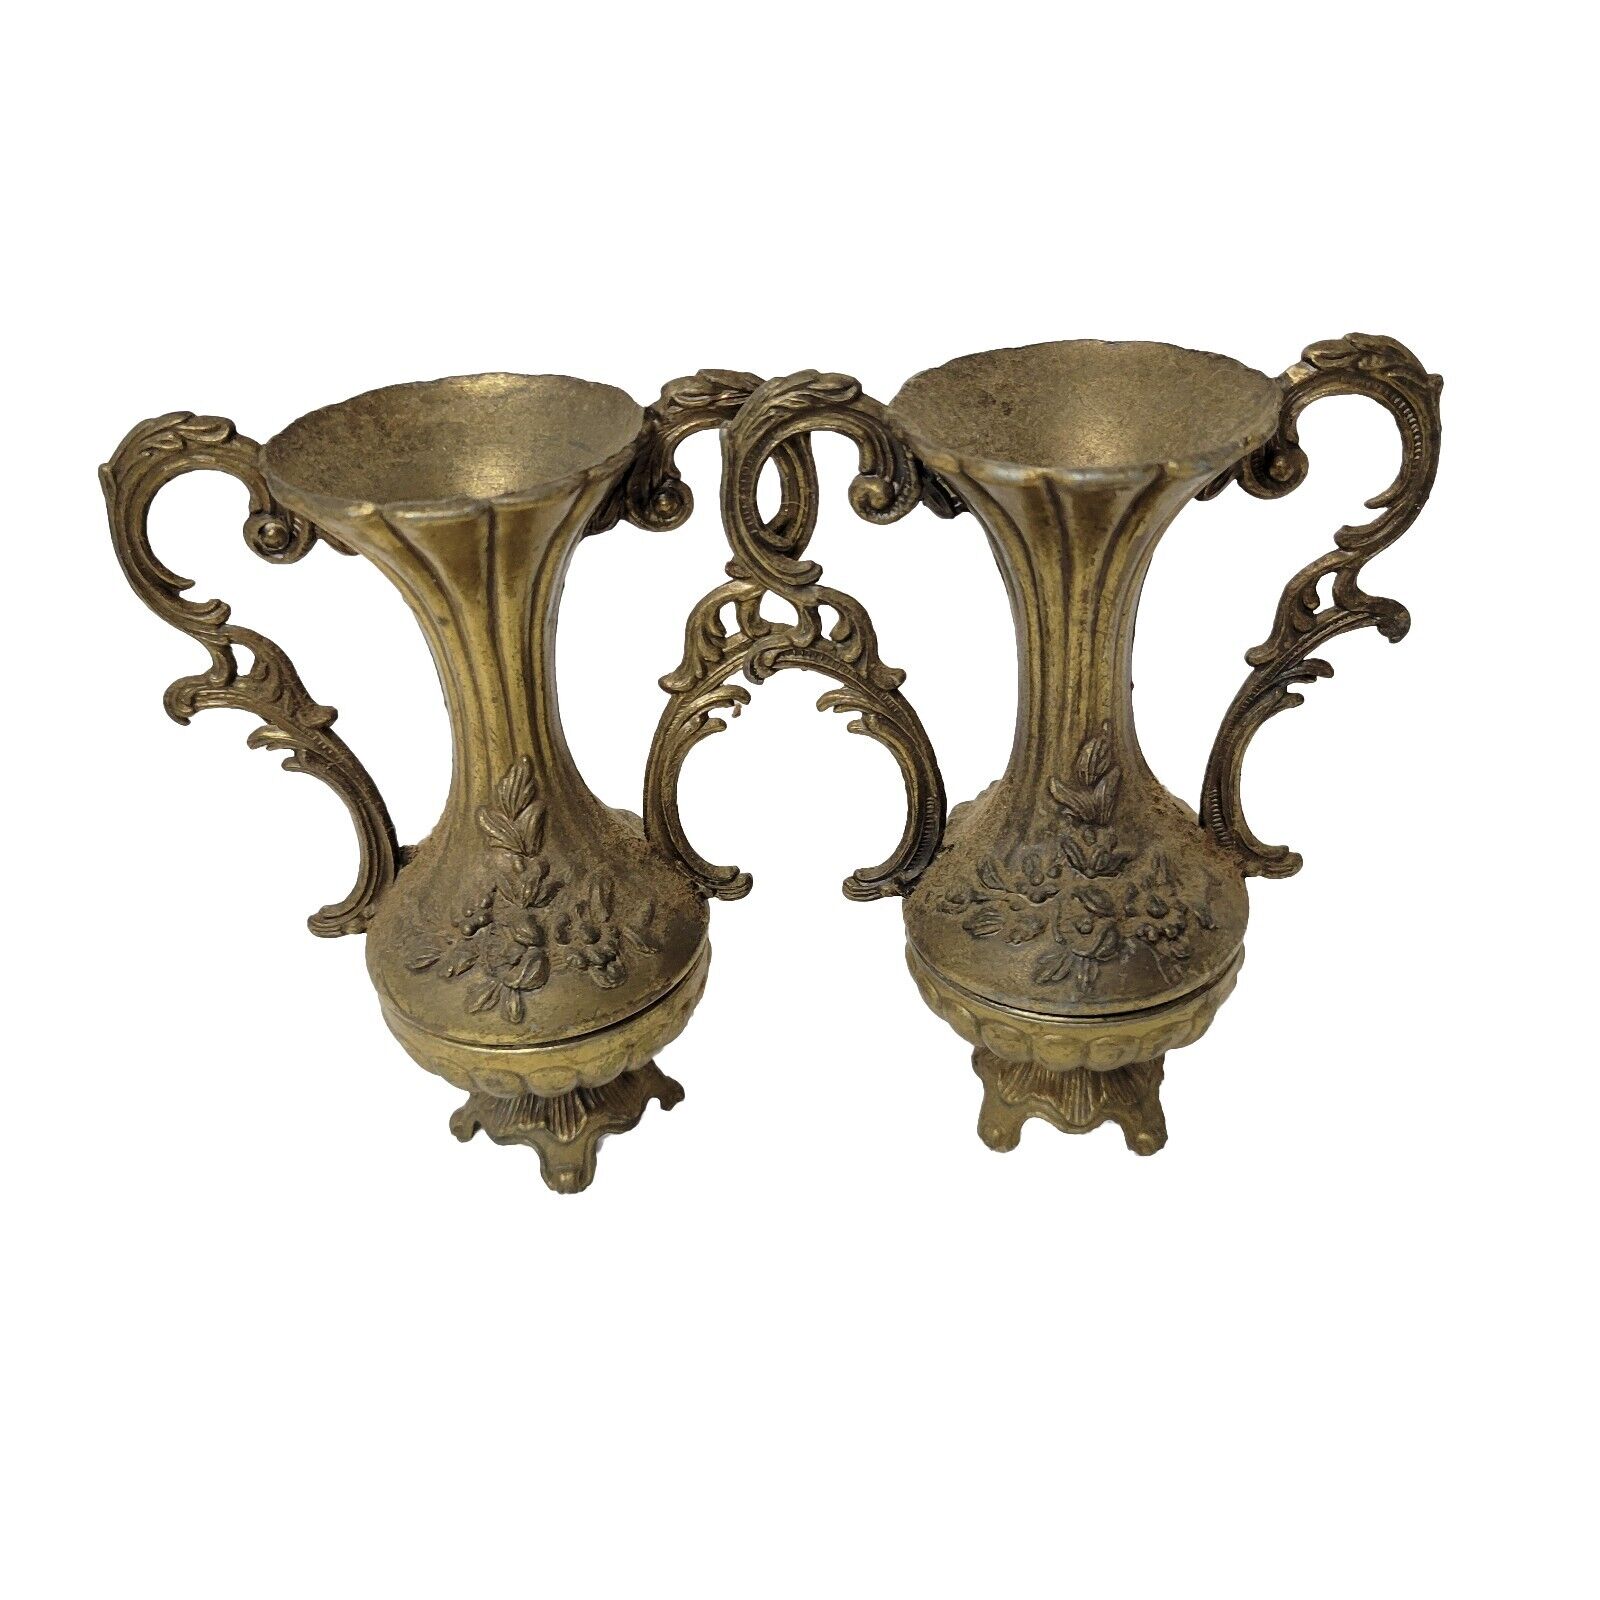 Vintage Vase Footed Gold Italian Urn Handles Home Decor Mid Century Modern Retro